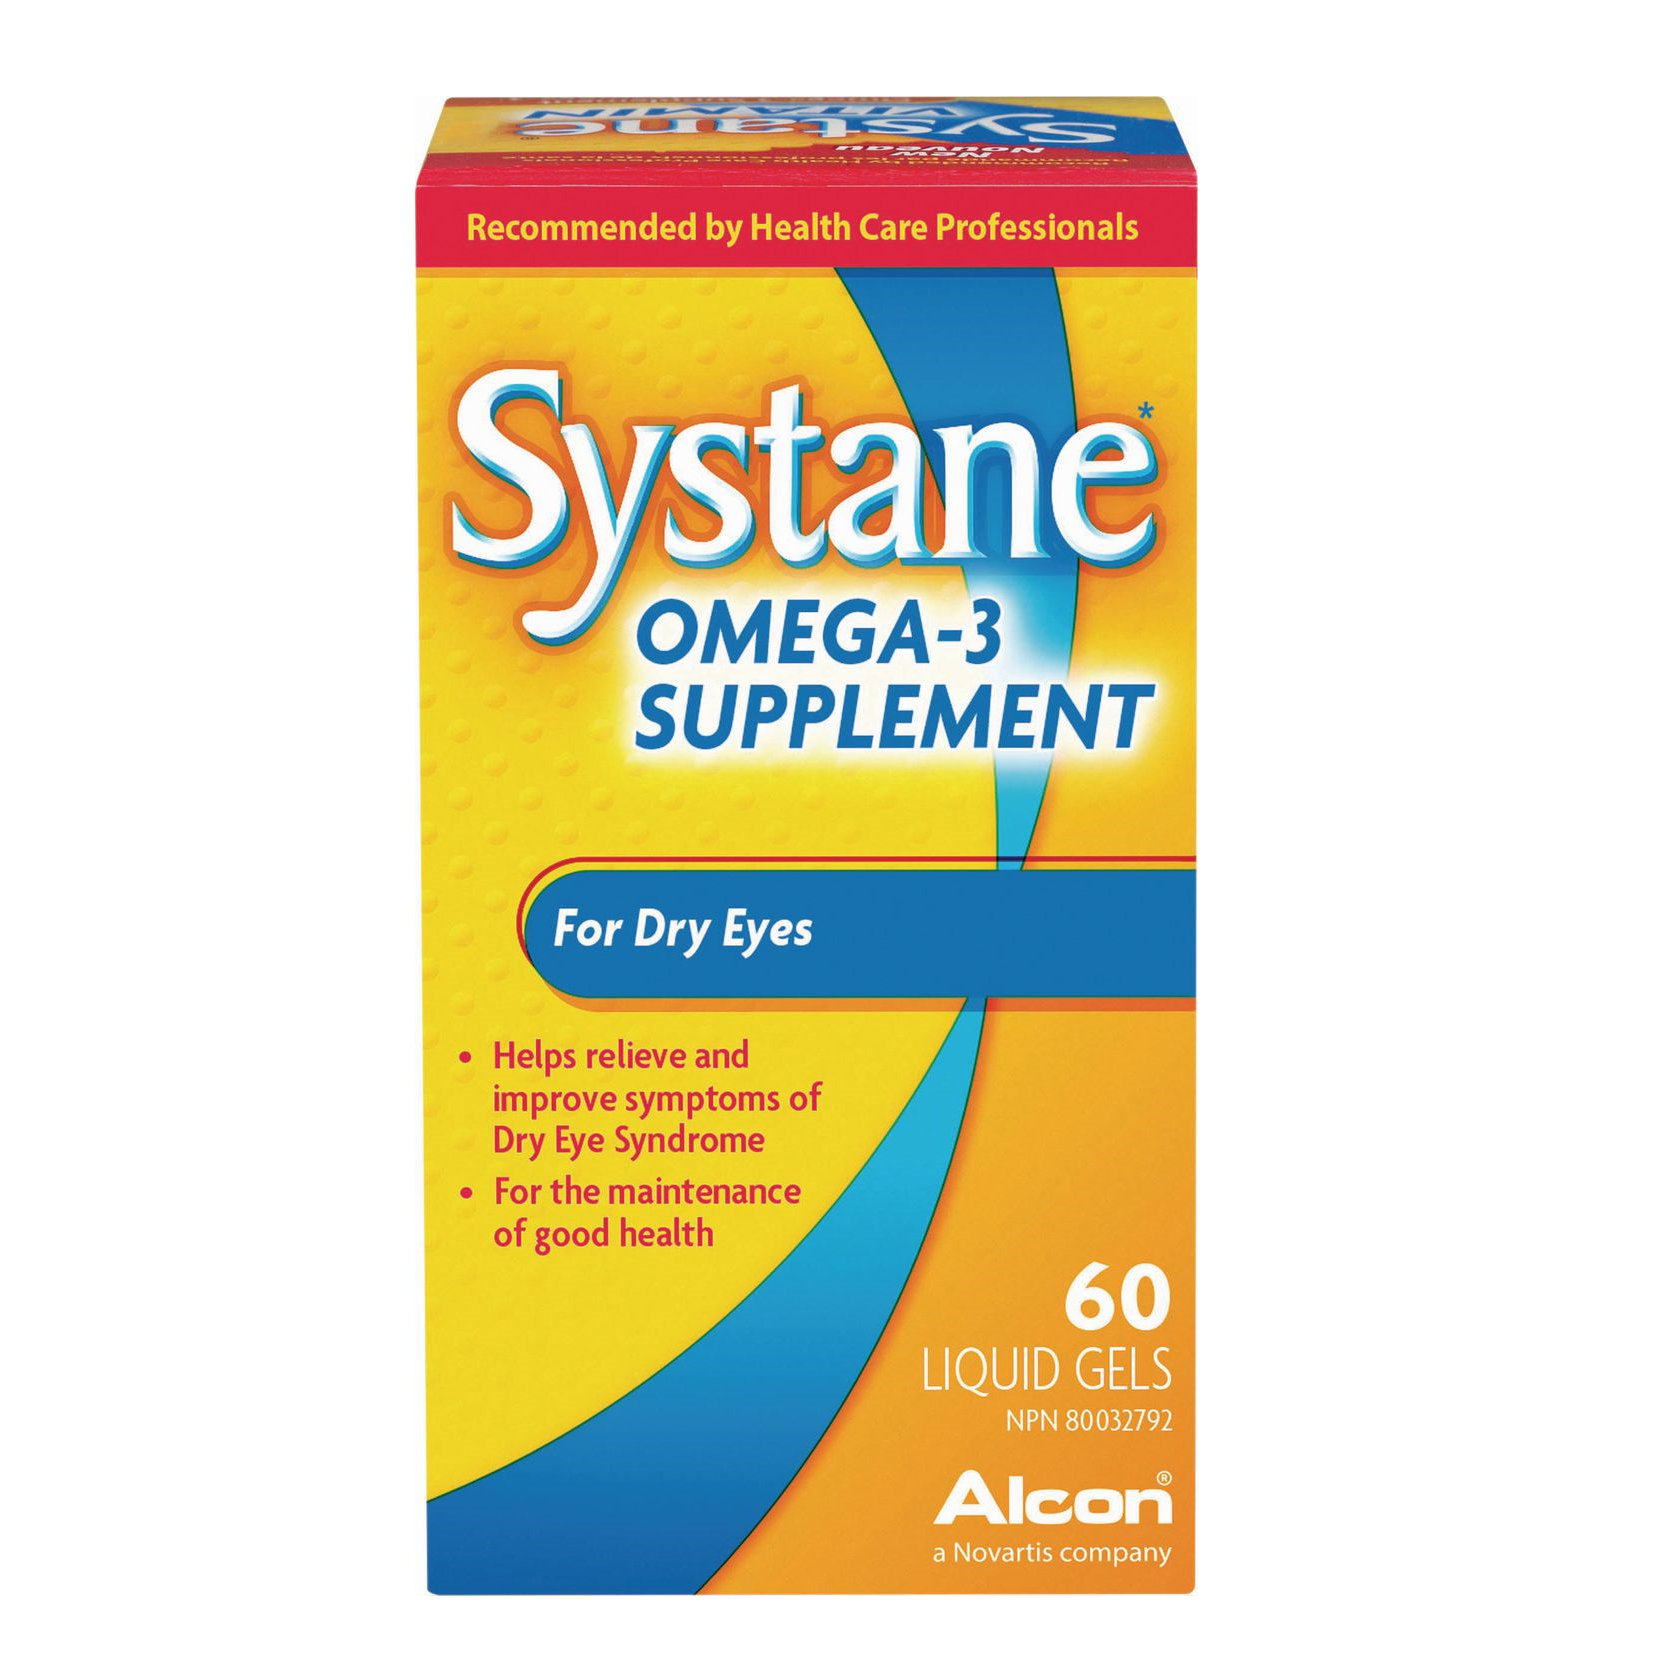 Systane Omega-3 Supplement 60 Liquid Gels